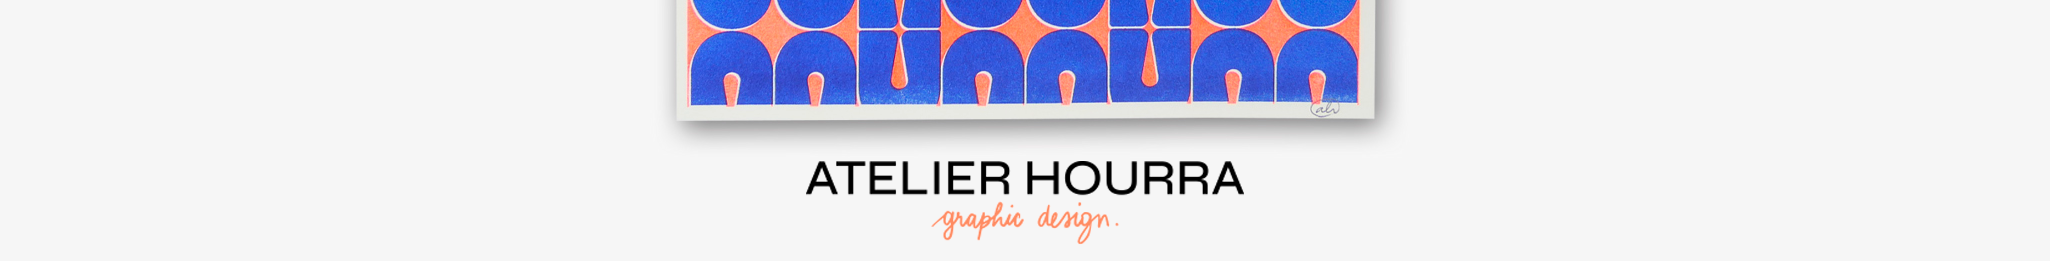 Atelier hourra's profile banner